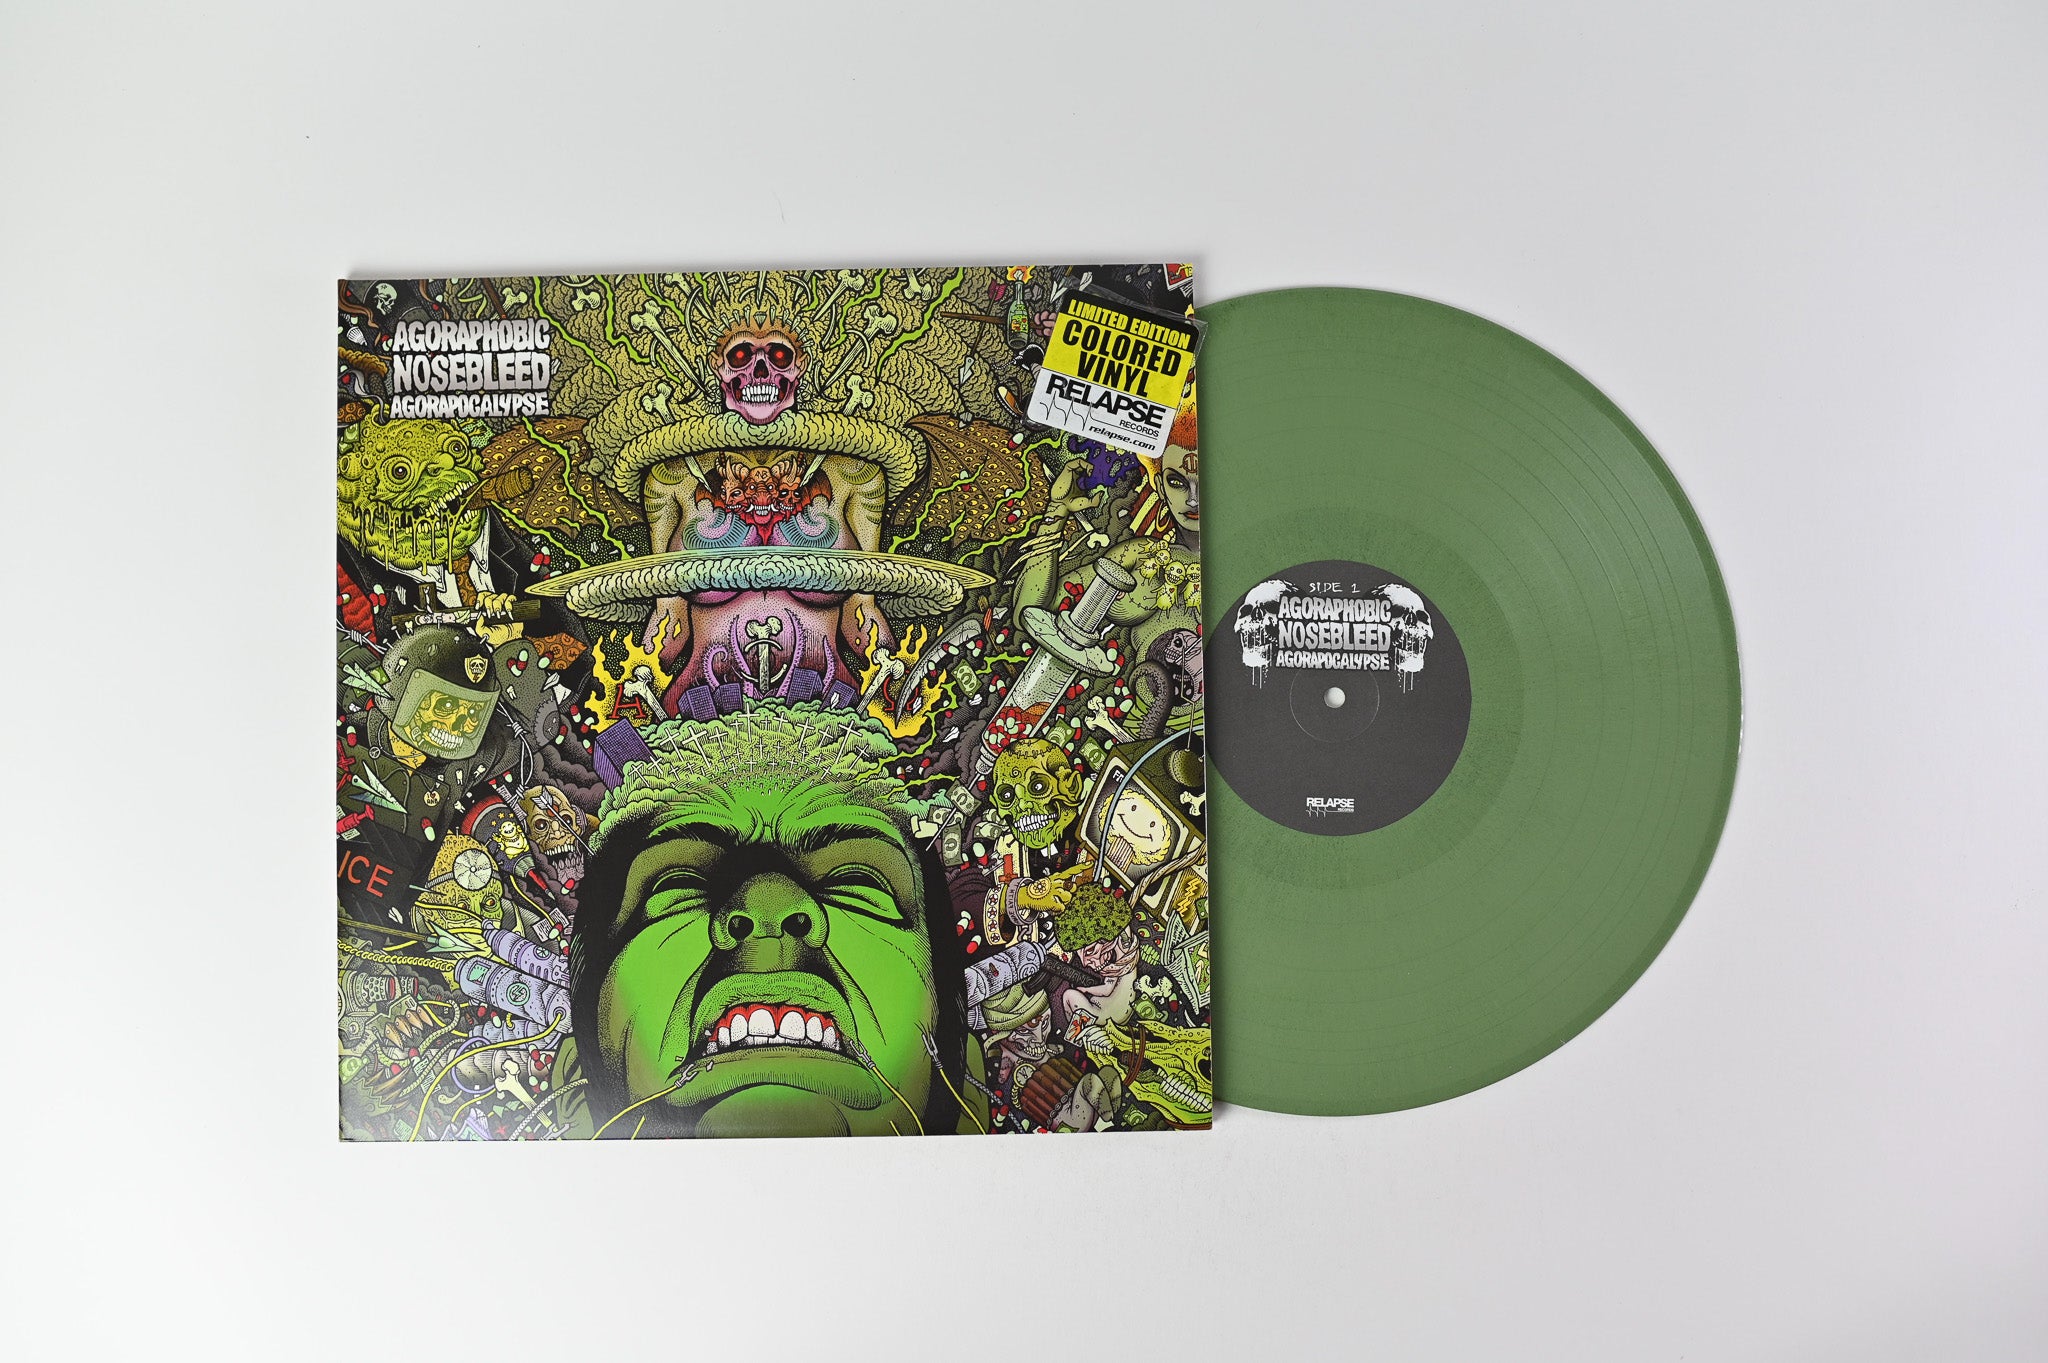 Agoraphobic Nosebleed - Agorapocalypse on Relapse Ltd Green Vinyl